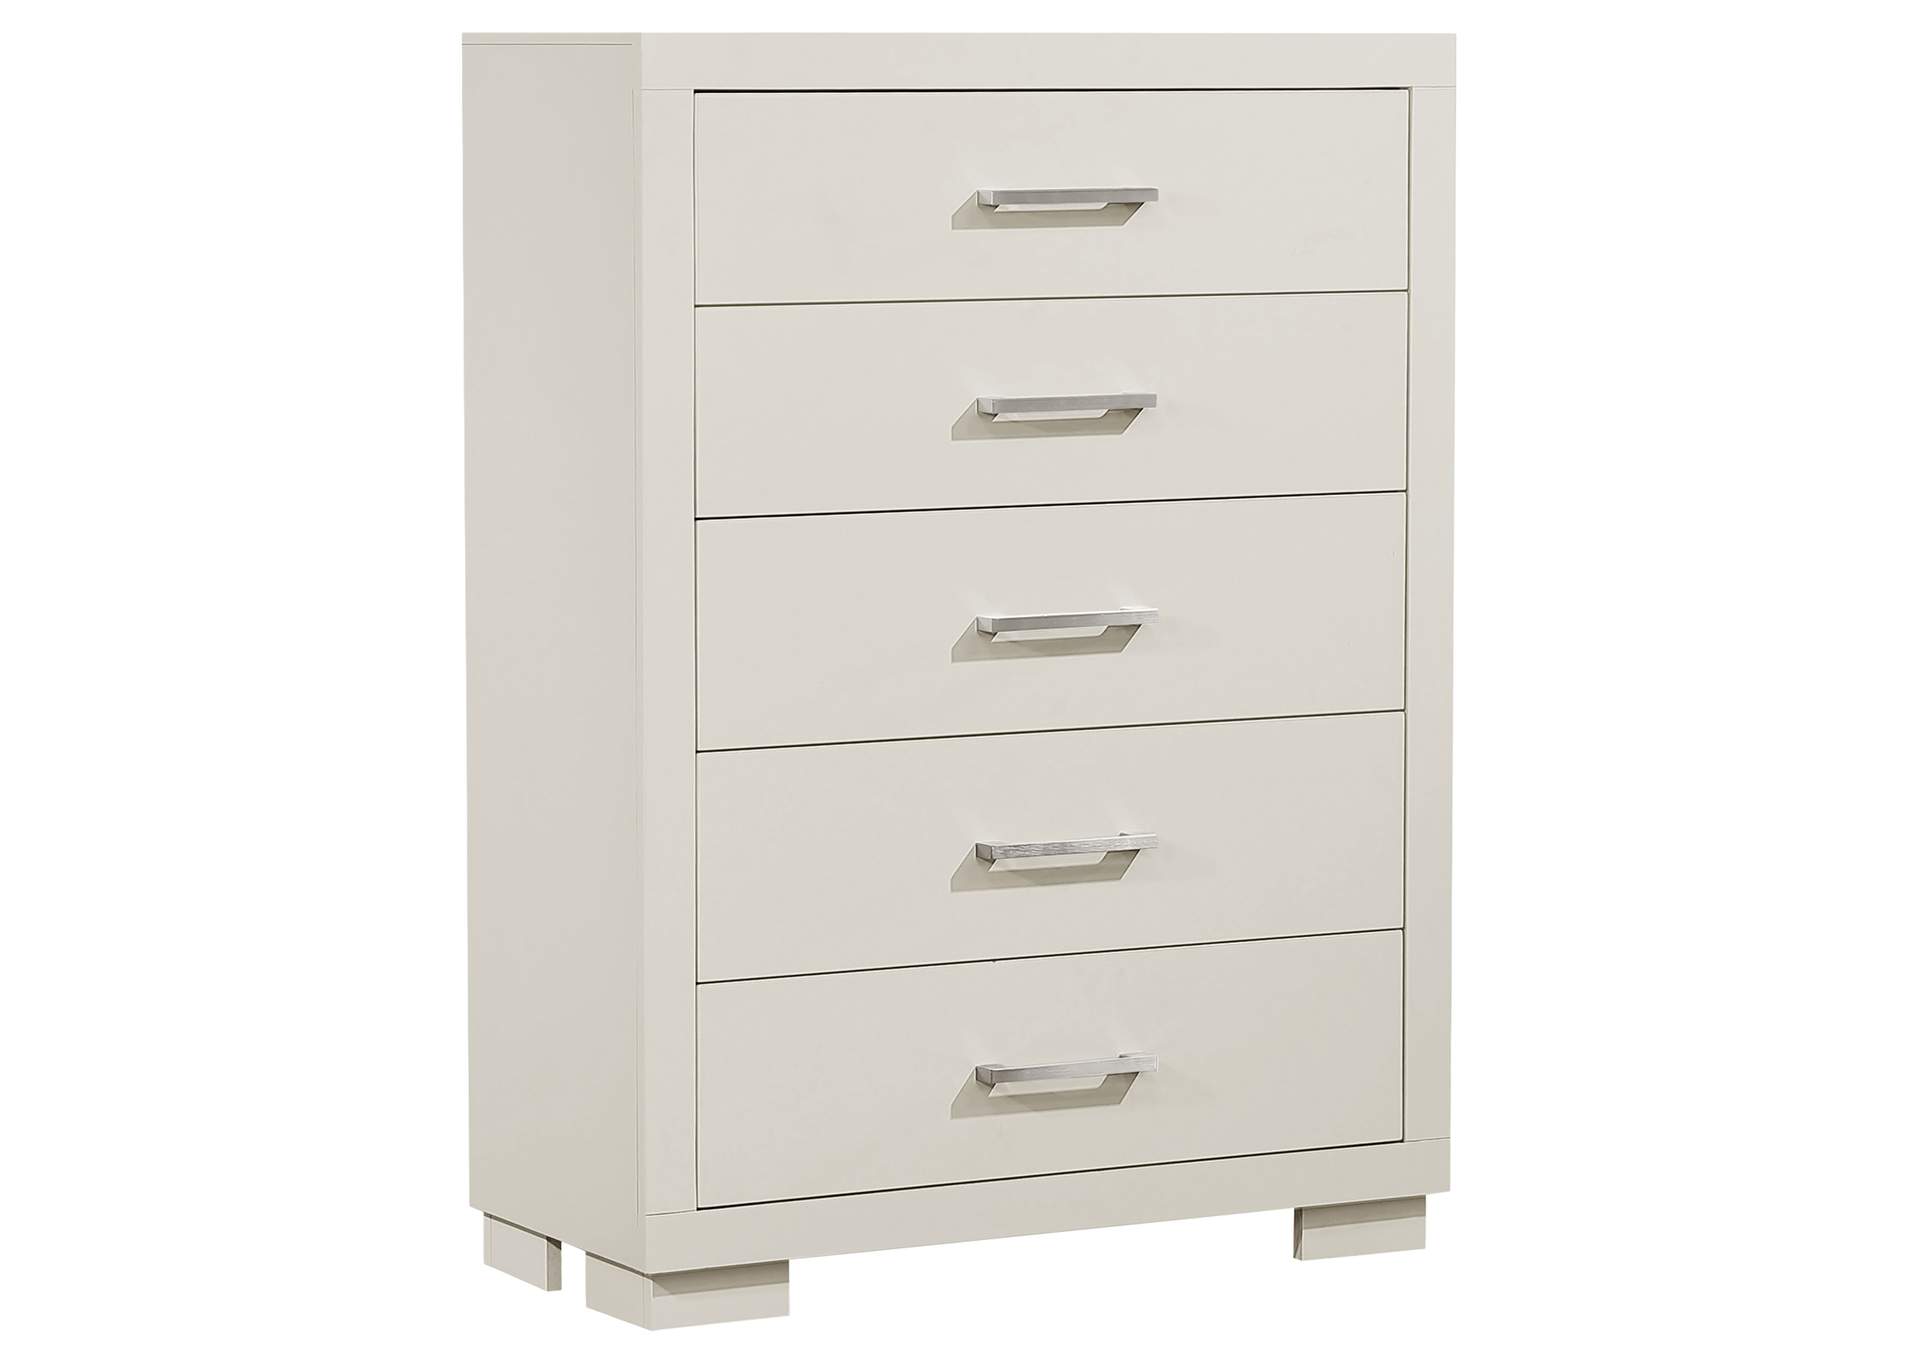 Jessica 5-drawer Chest White,Coaster Furniture